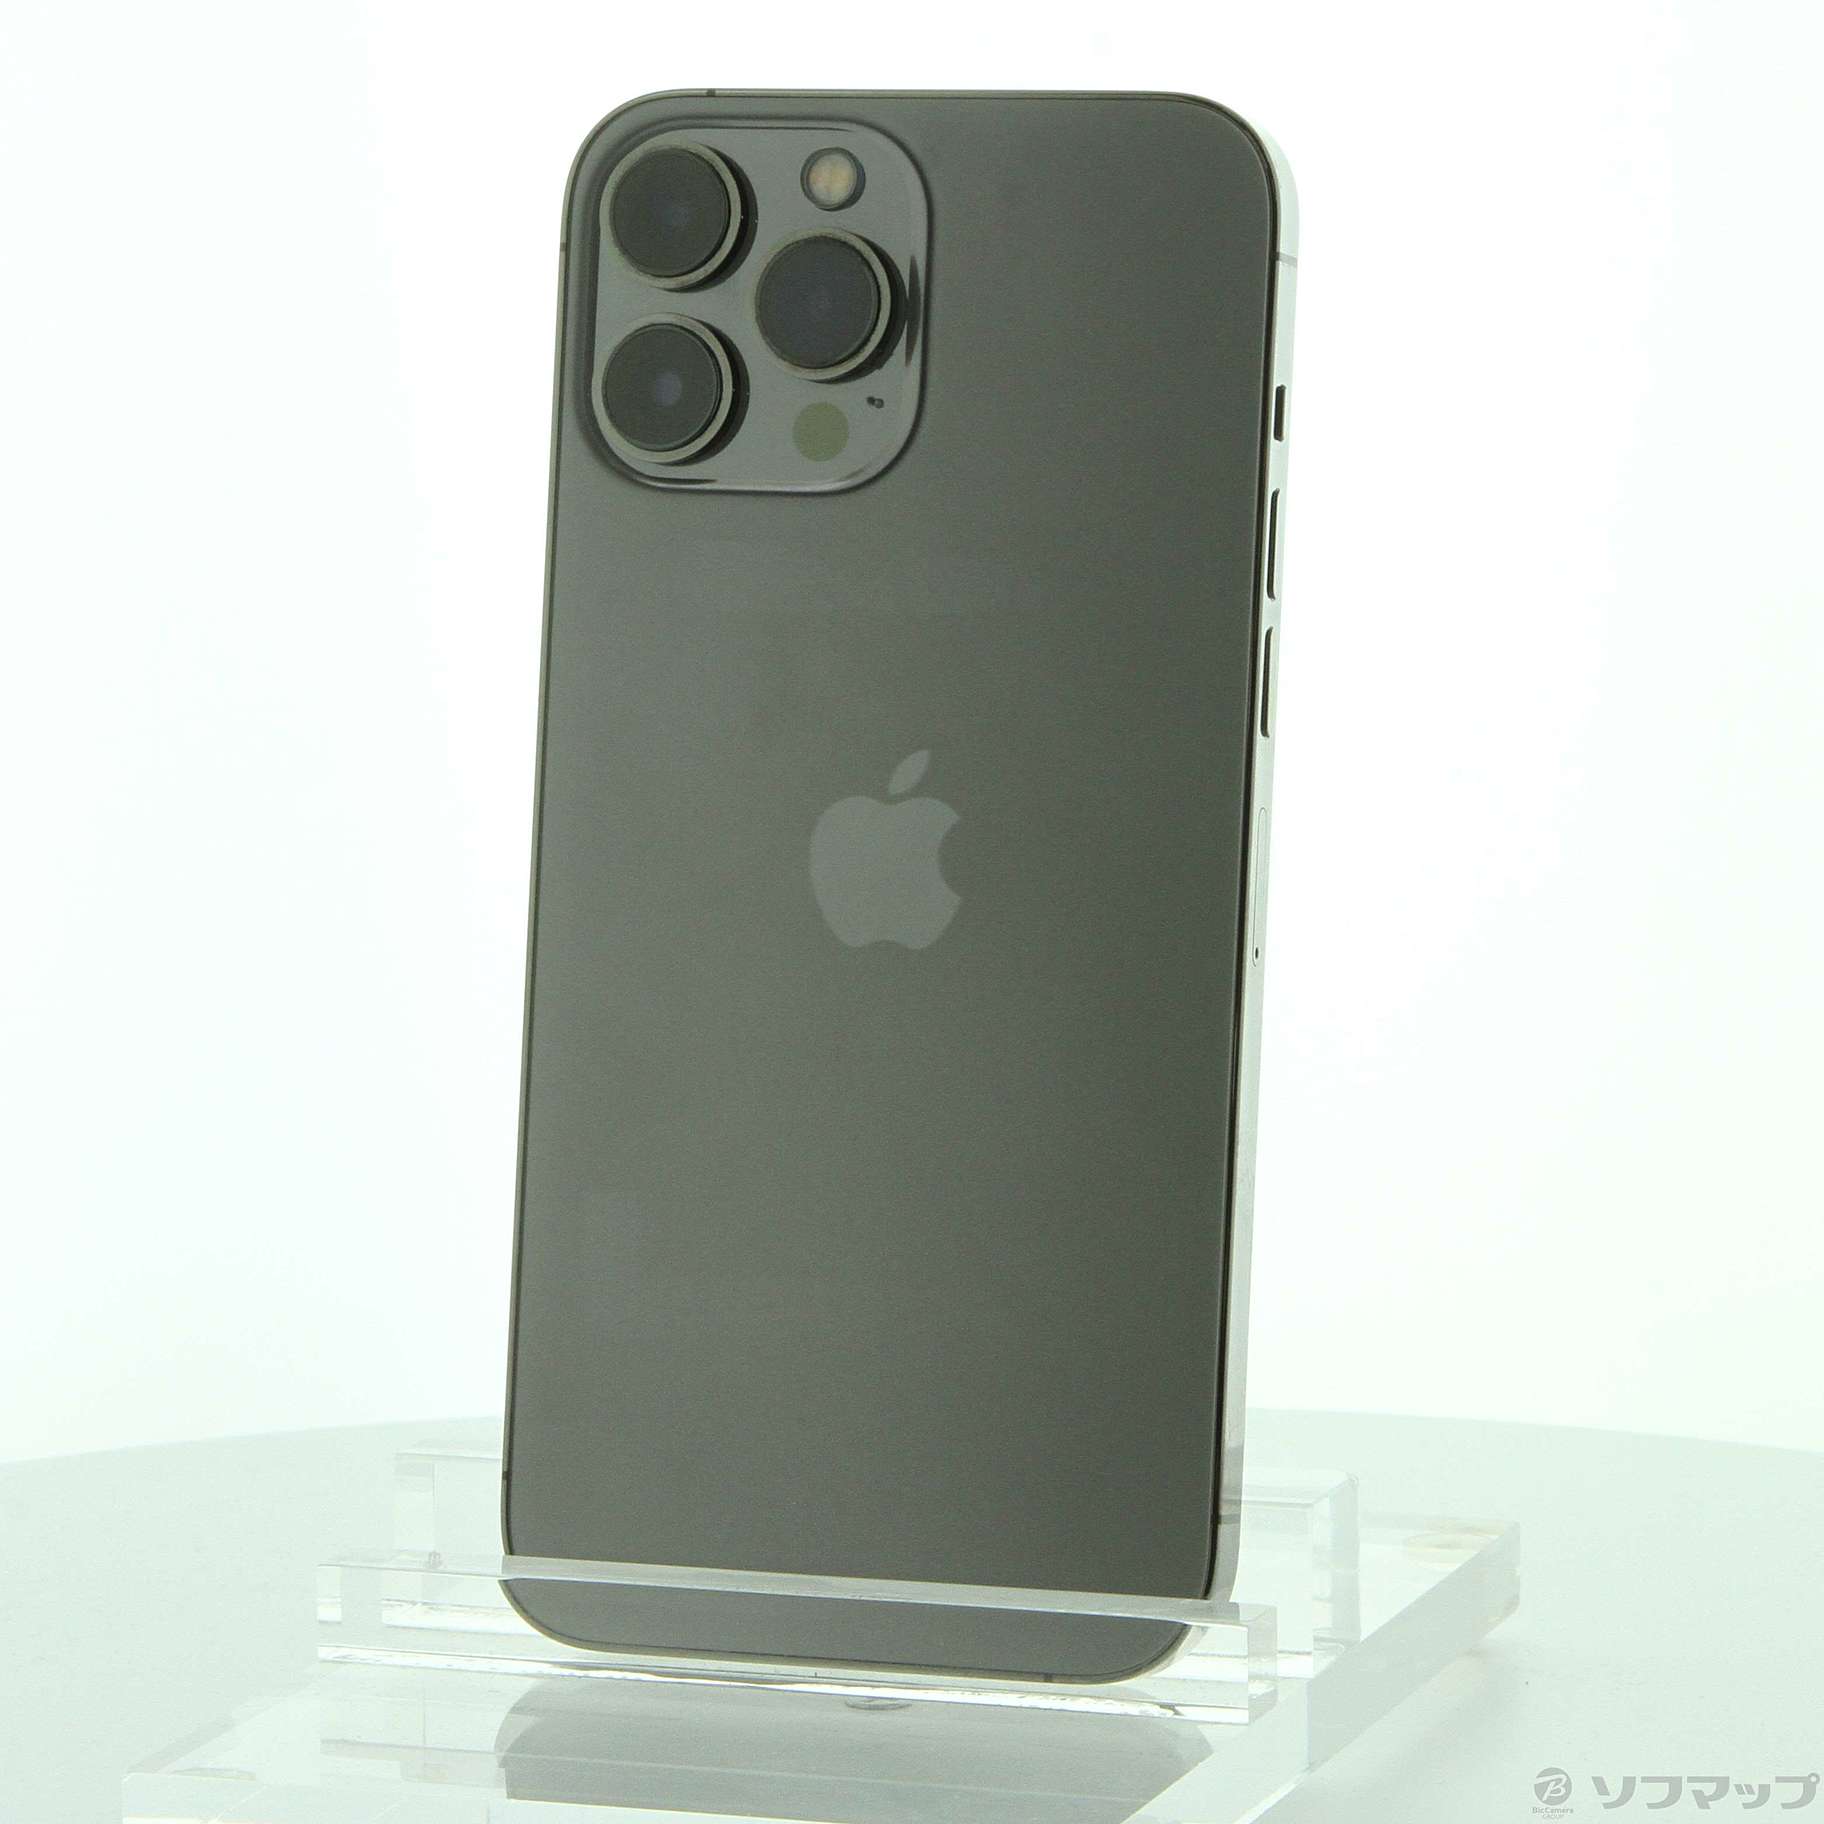 iPhone13 Pro 256GB APPLE SIMフリー 中古 Cランク 商品補償100日間